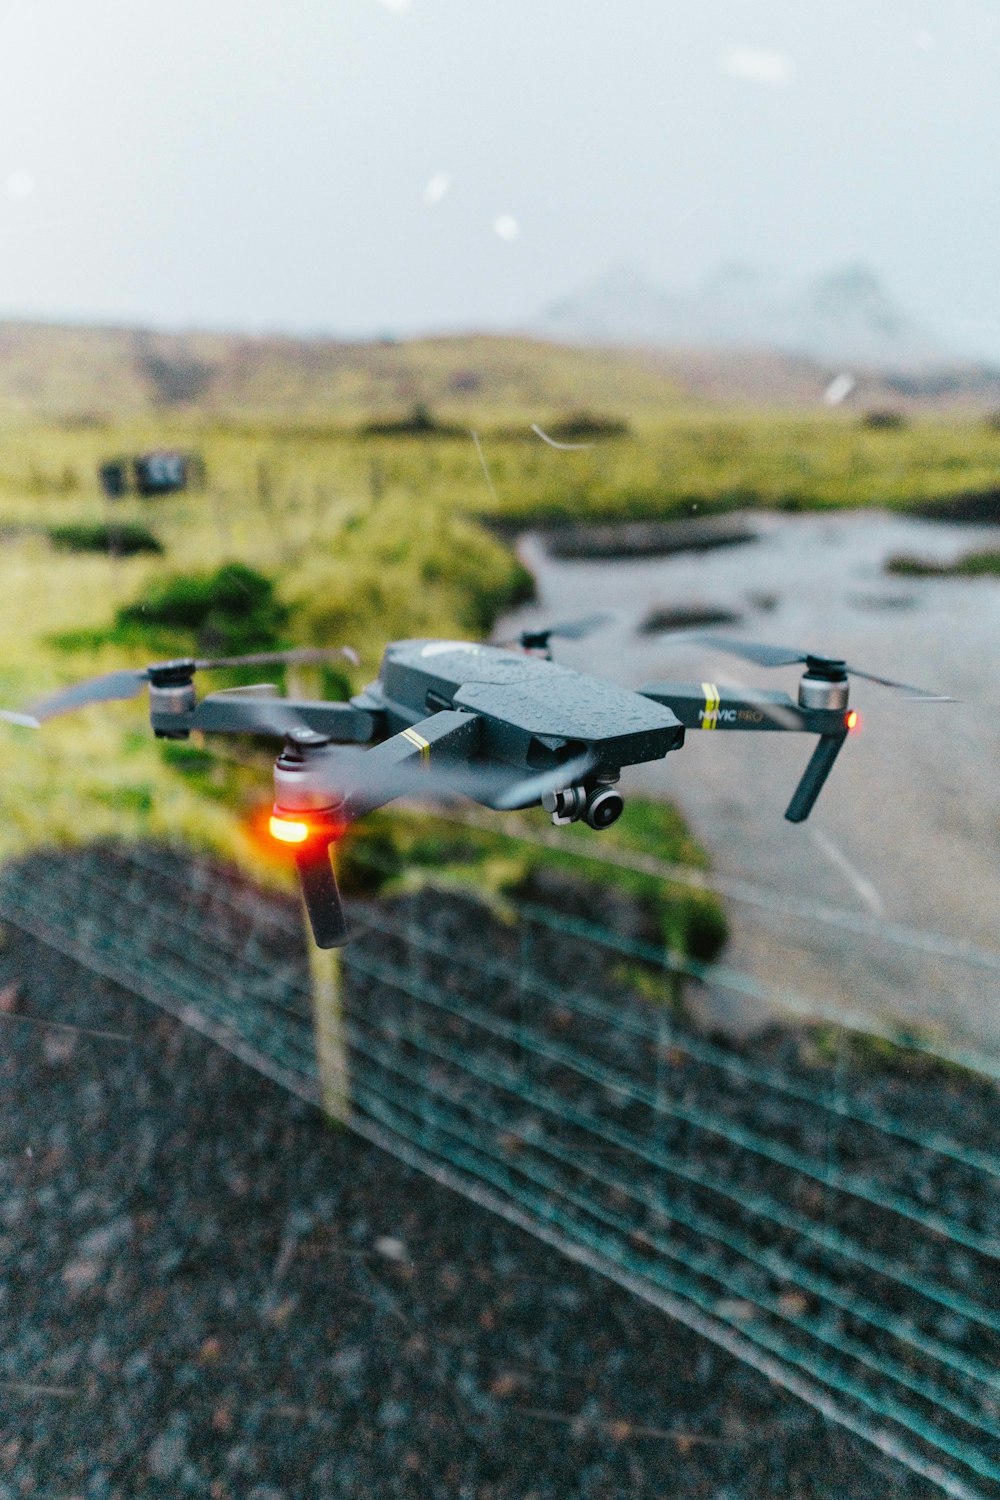 gray drone on flight